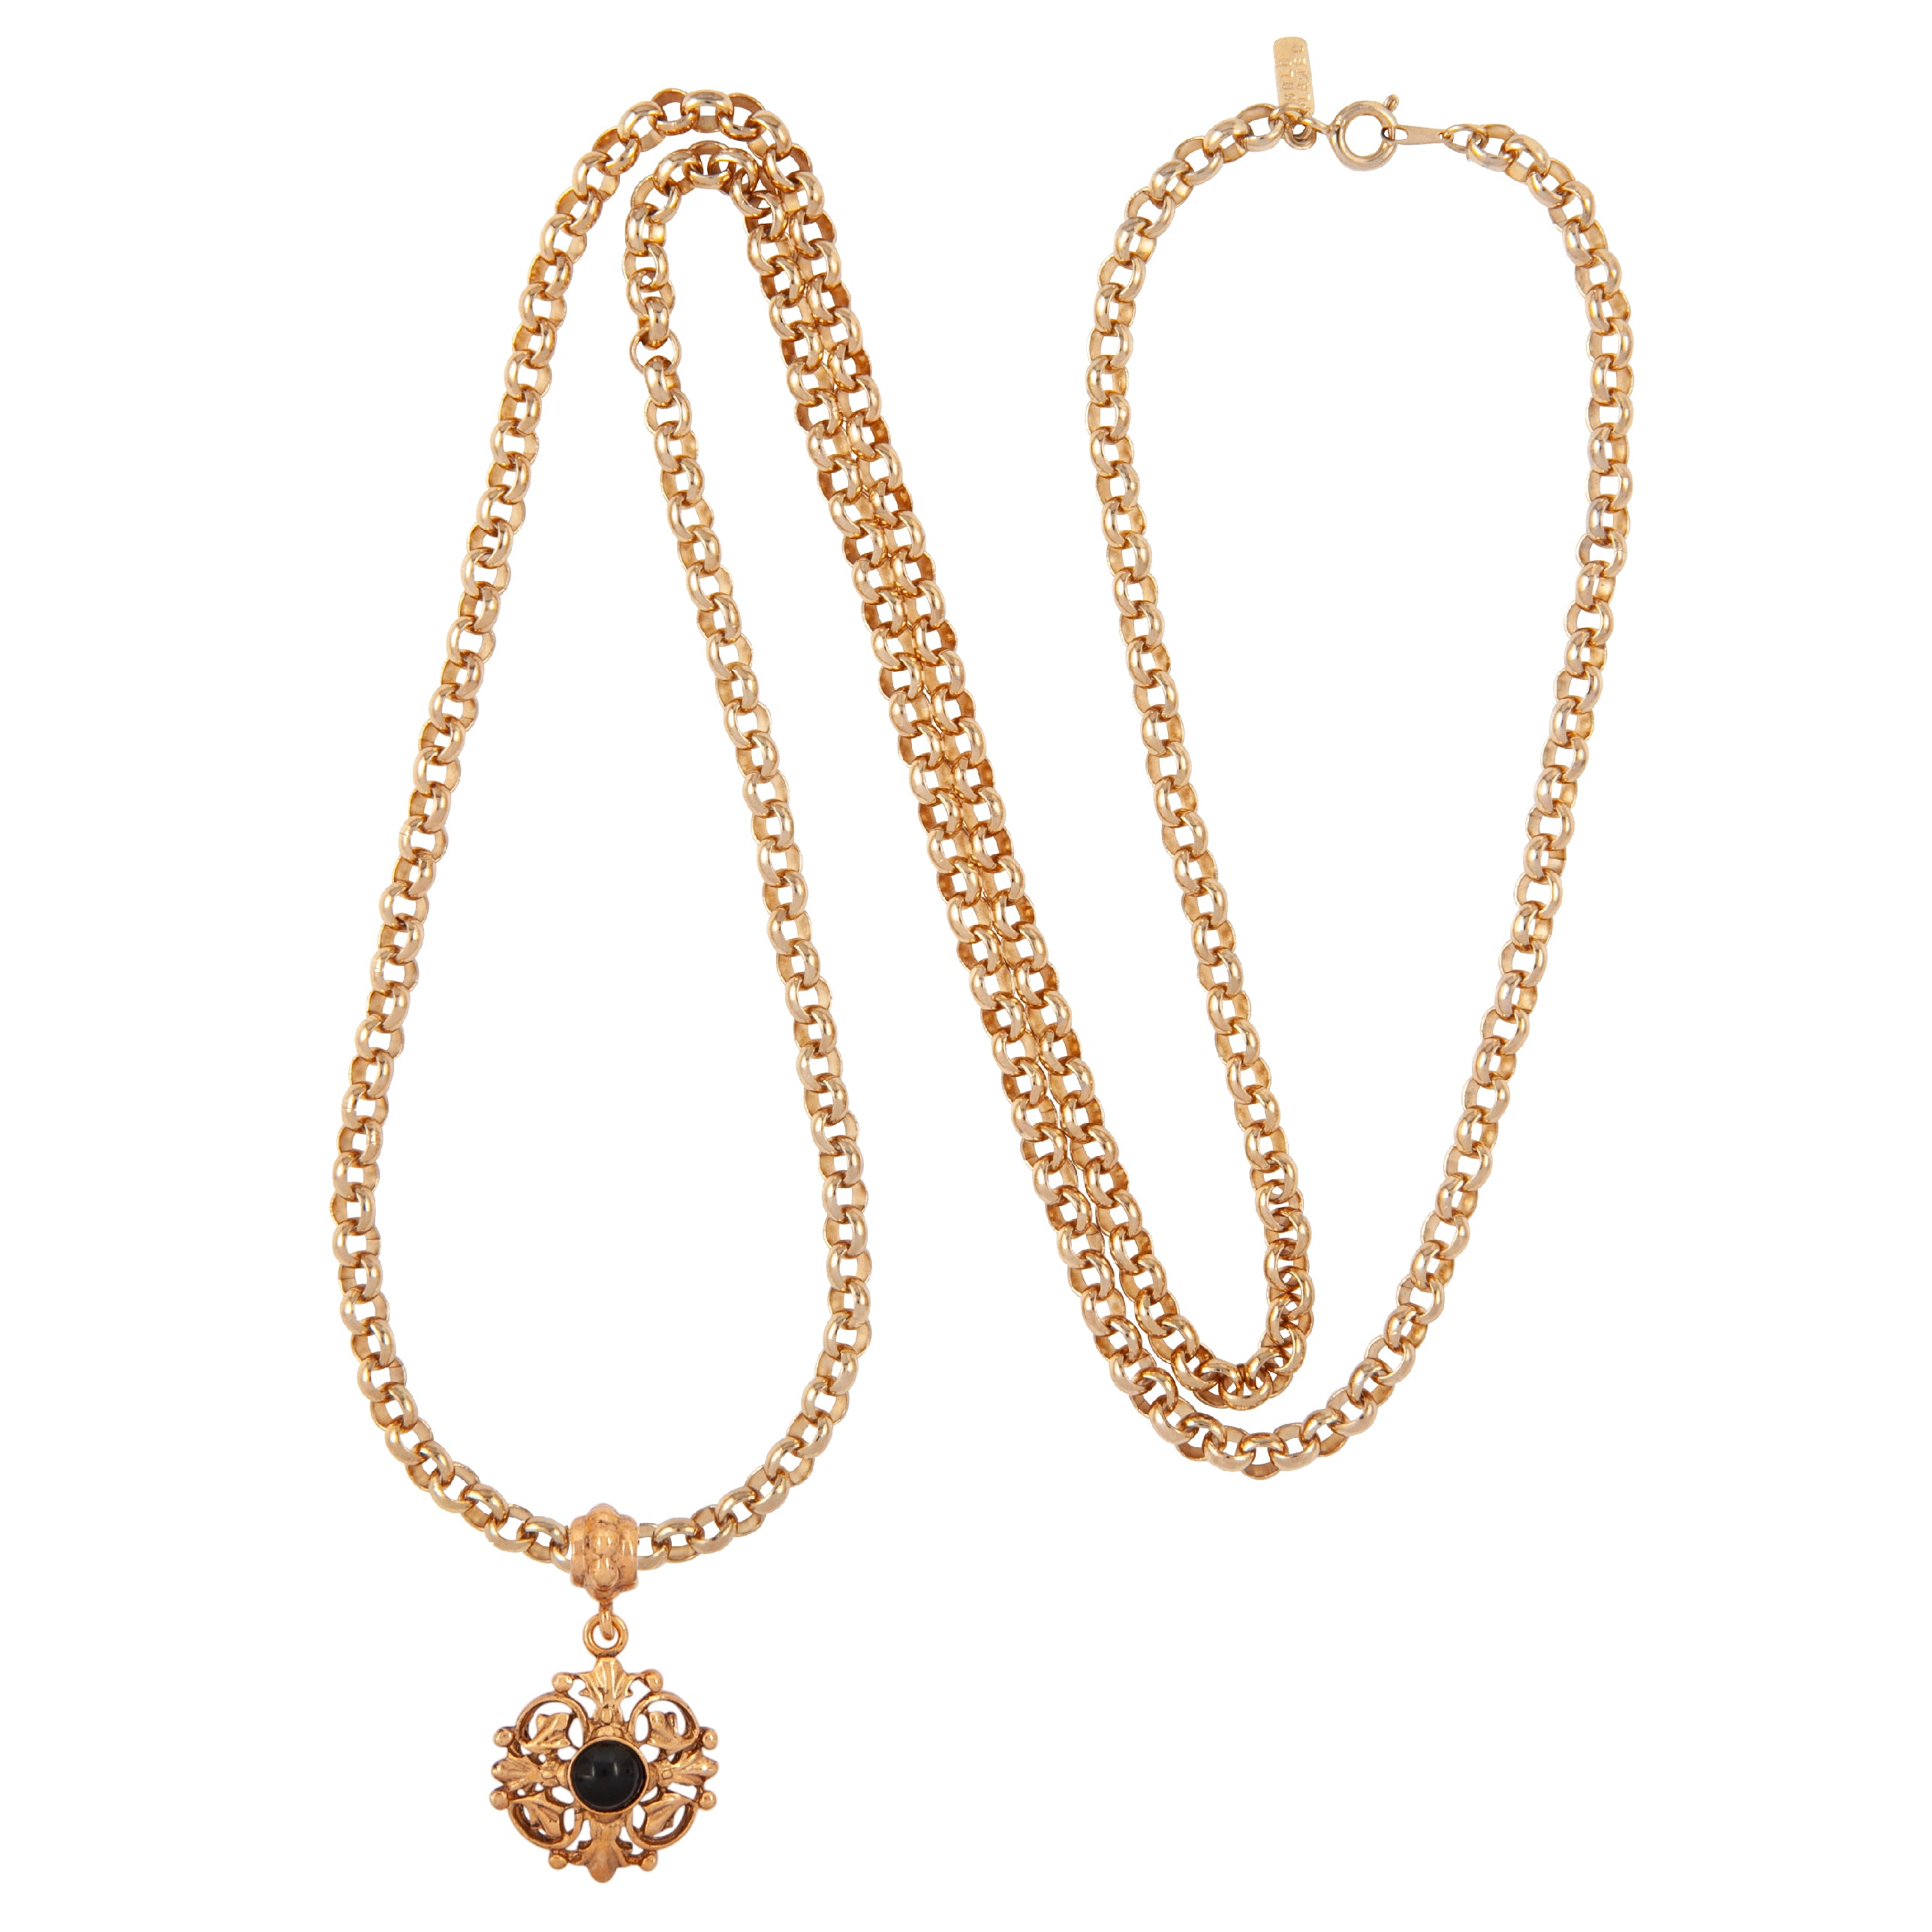 1990s Vintage Ornate Pendant Belcher Chain Necklace